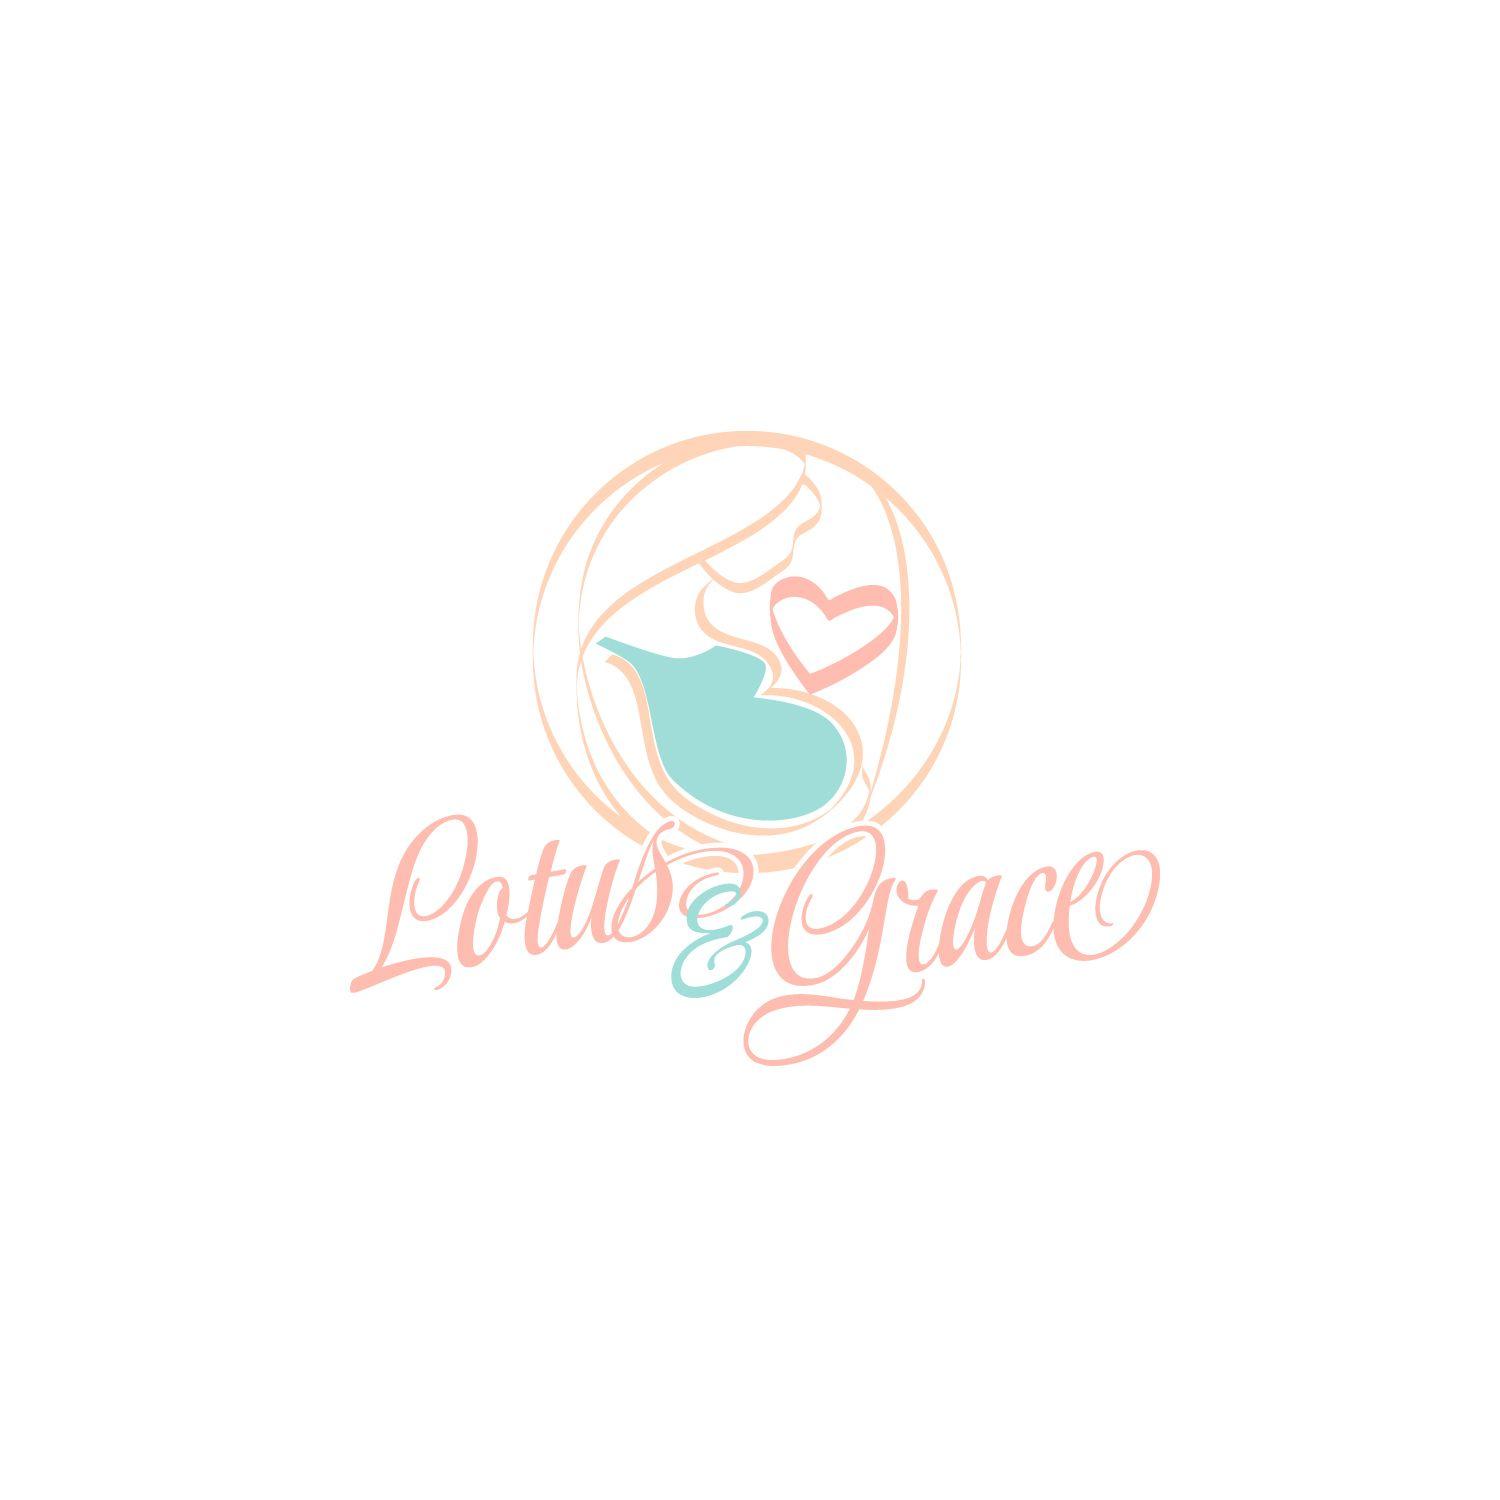 Grace Beauty Logo - Feminine, Elegant, Hair And Beauty Logo Design for Lotus & Grace by ...